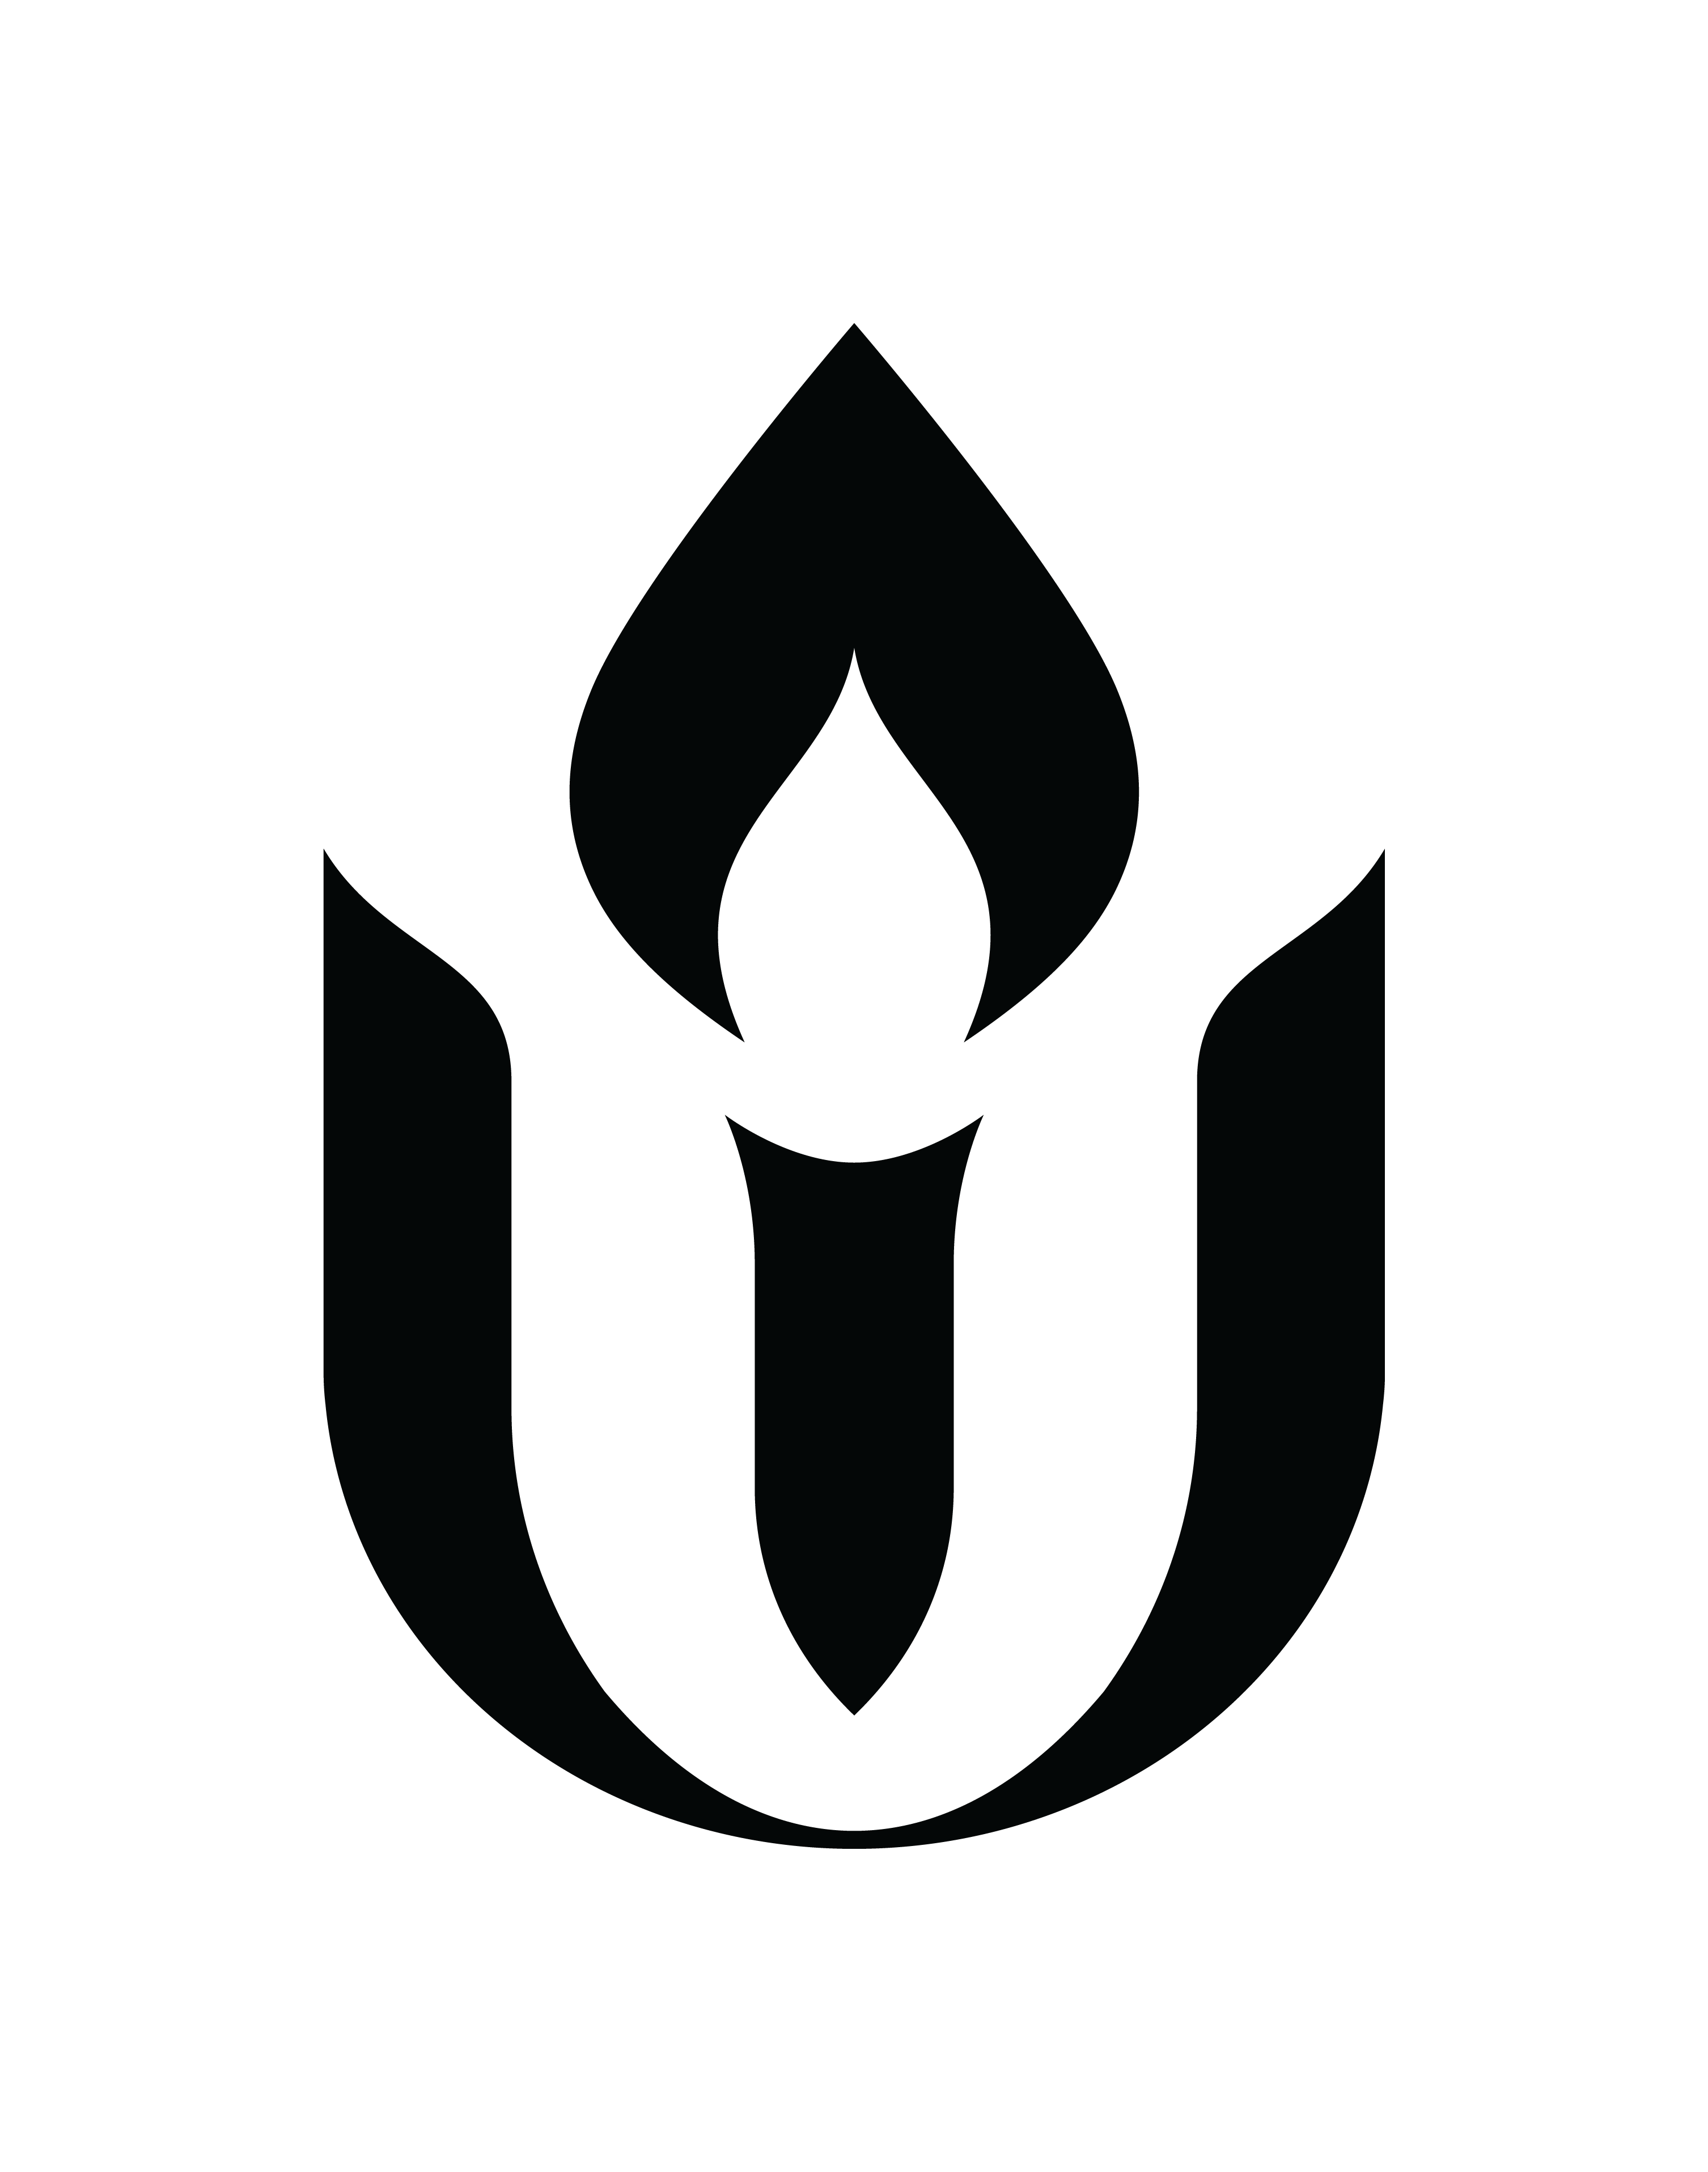 UUA Logo and Graphics.